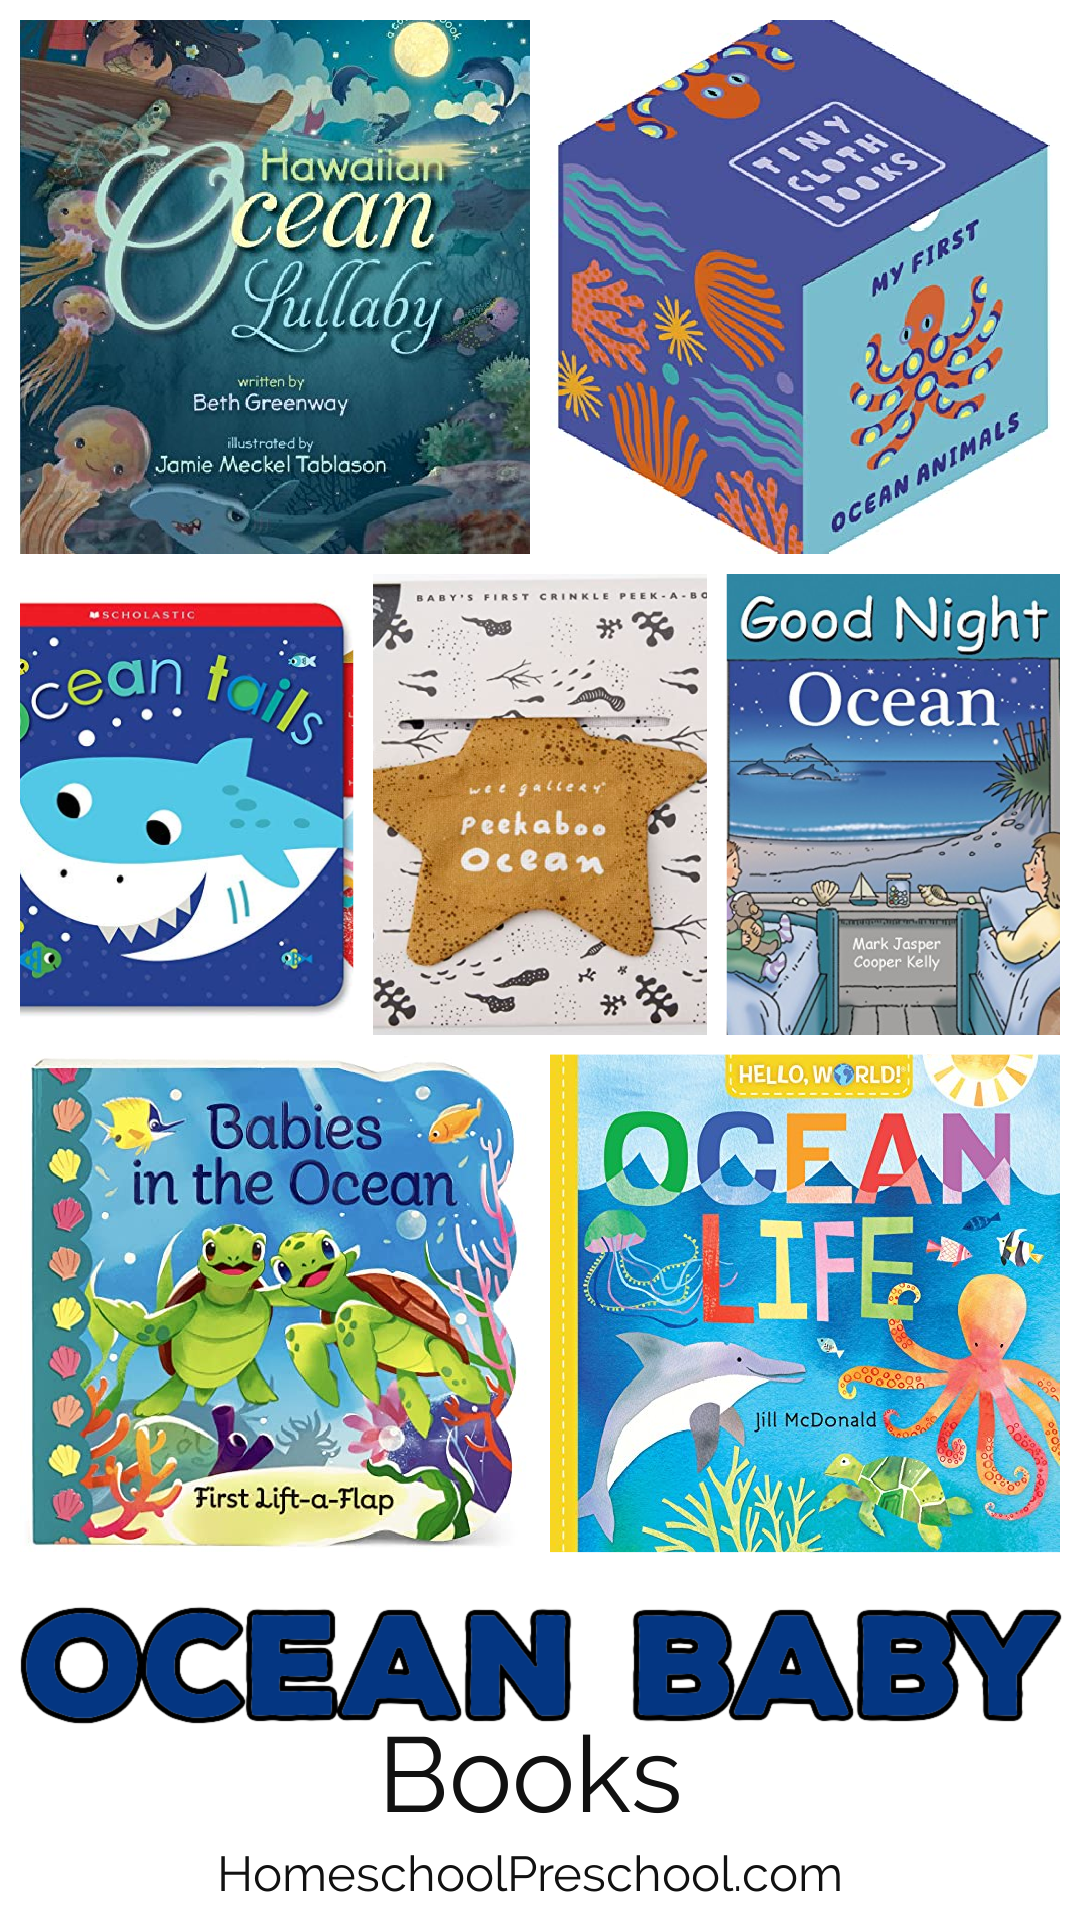 ocean-baby-books-2 Ocean Baby Books